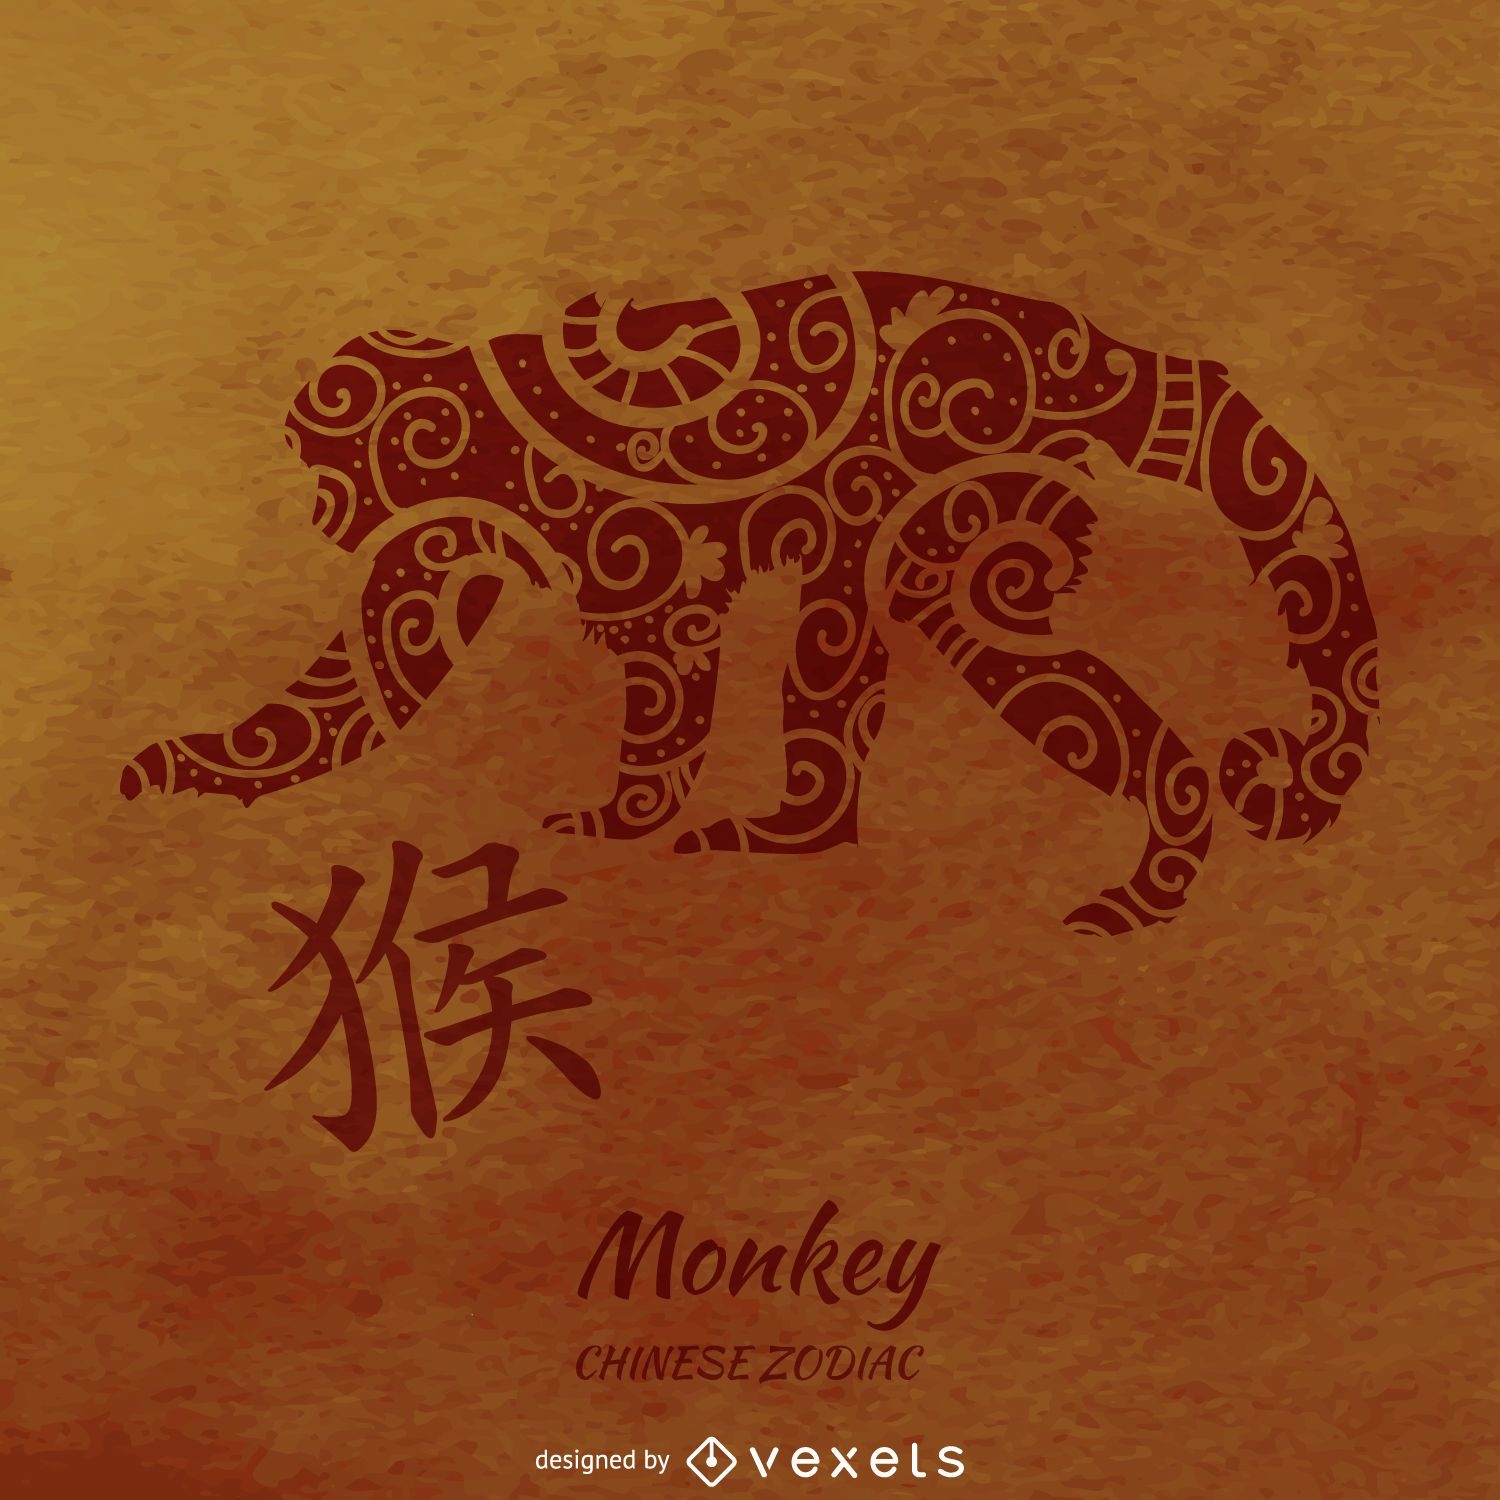 Chinese zodiac monkey illustration